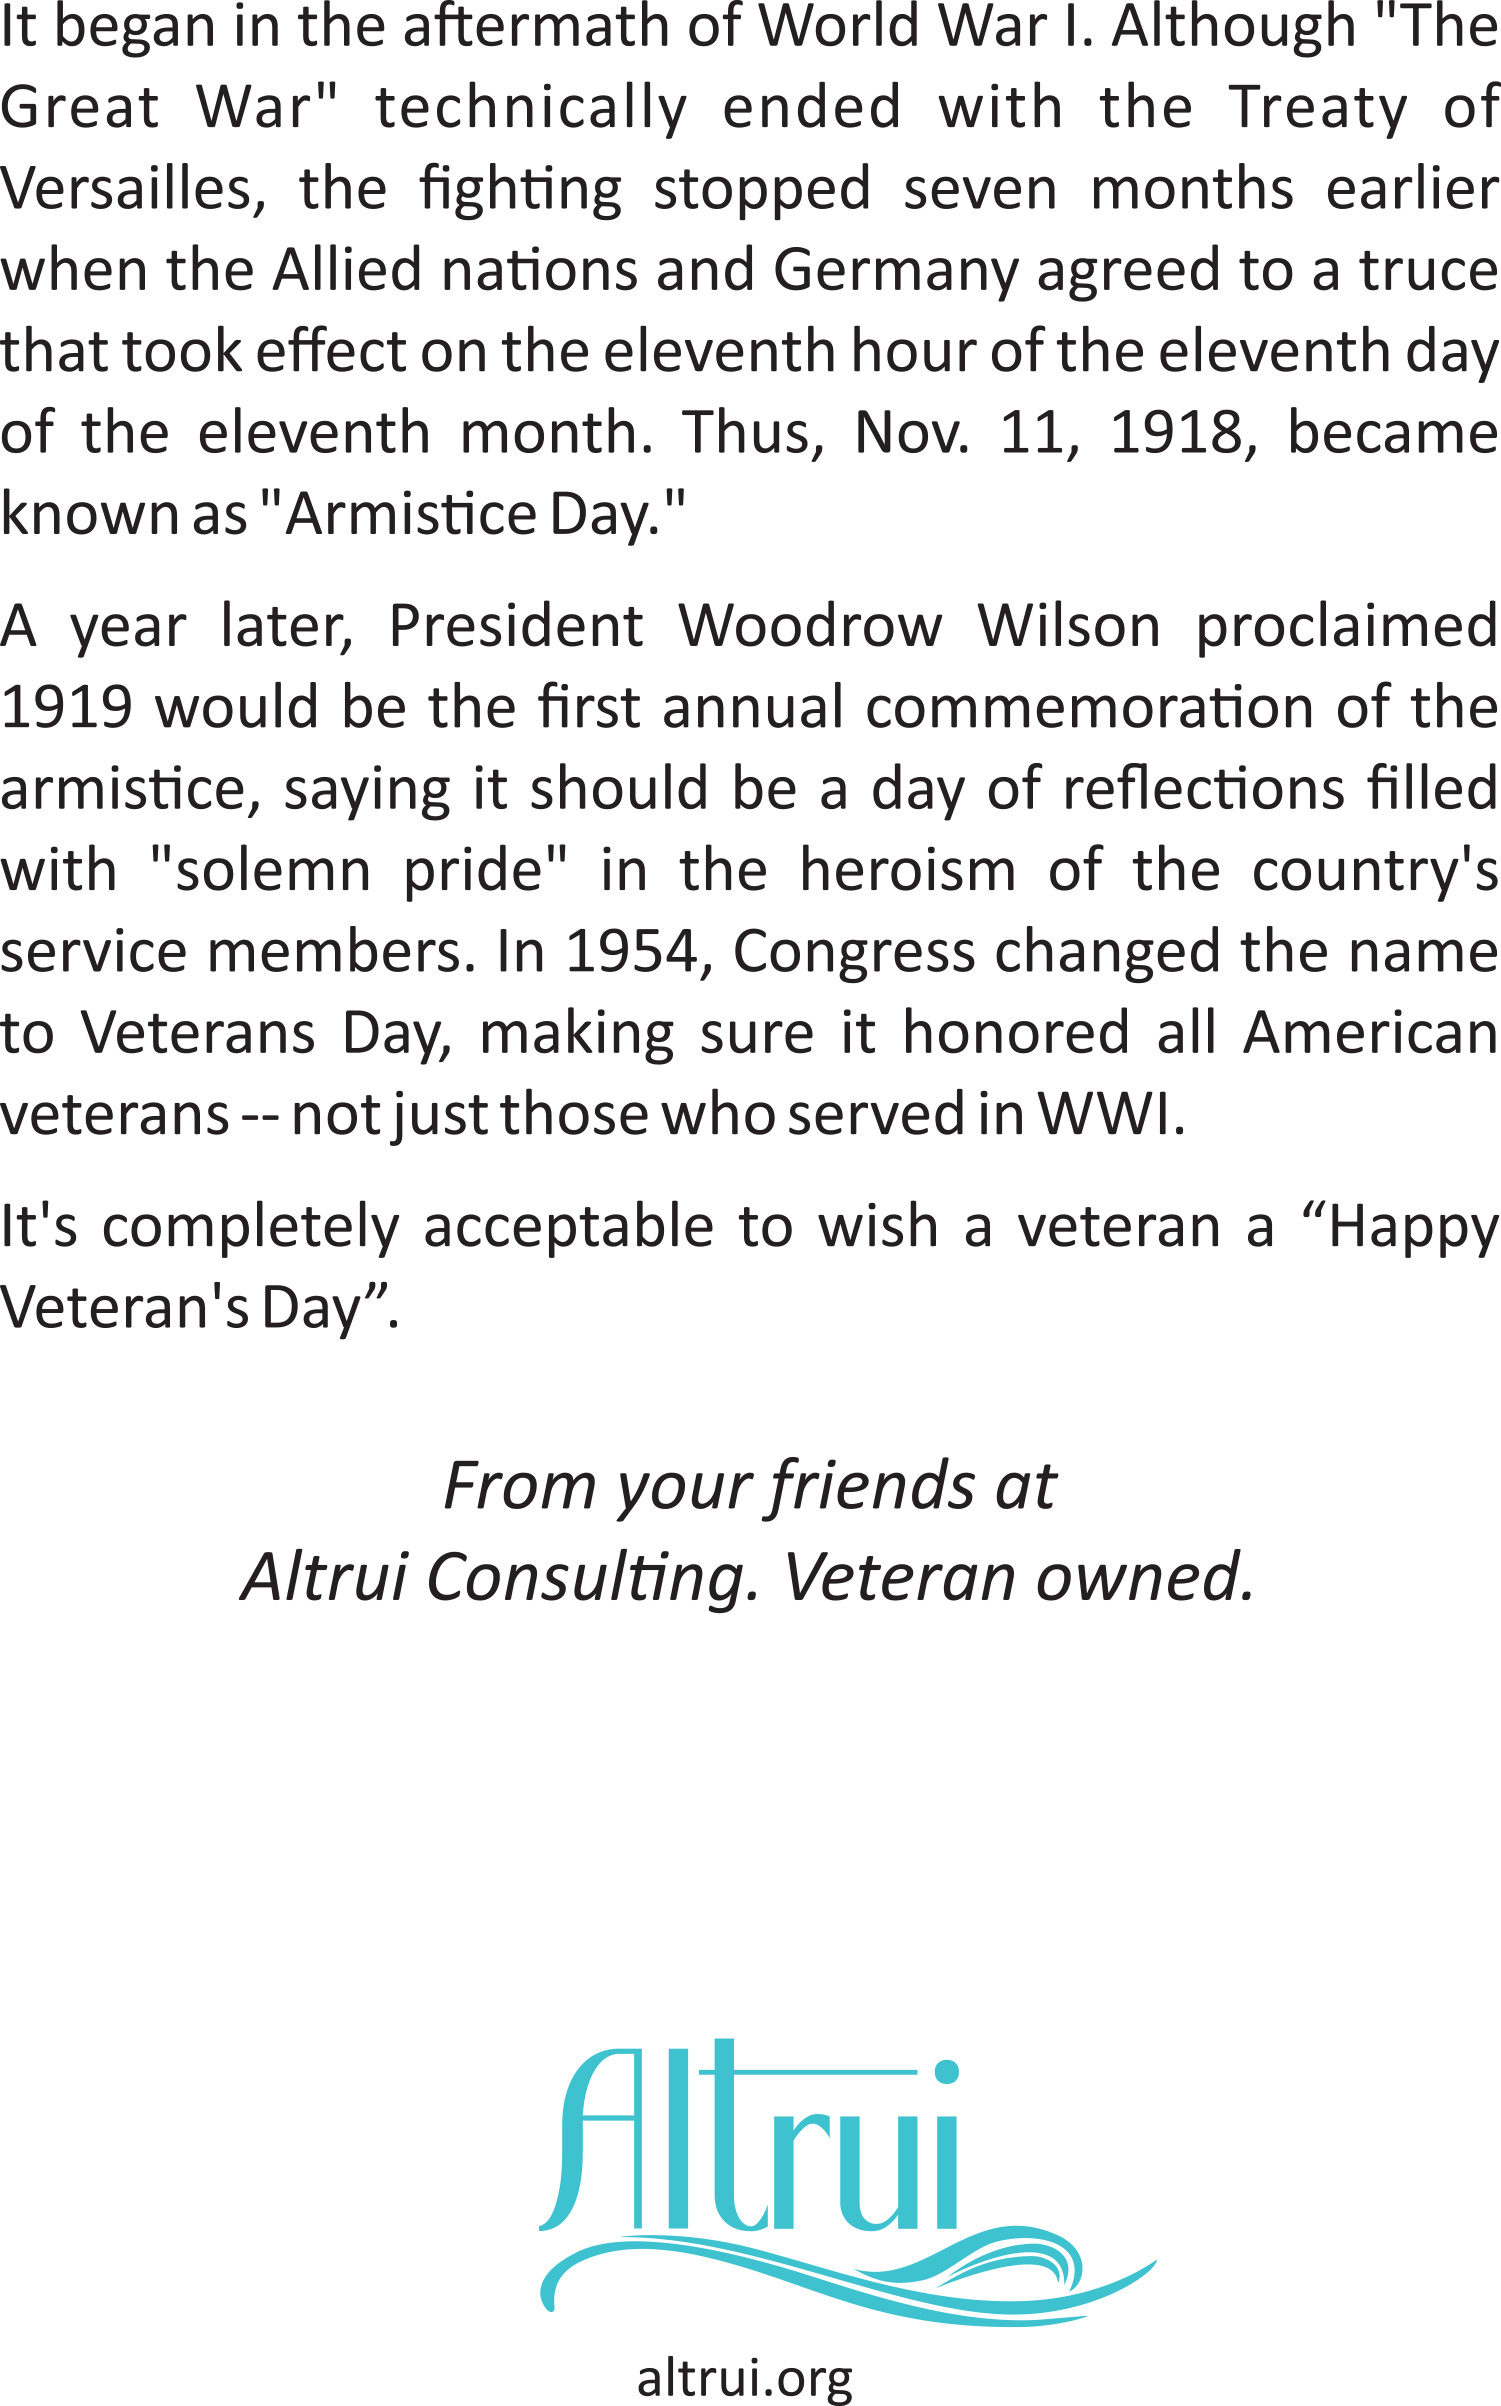 Altrui celebrates veterans day with info